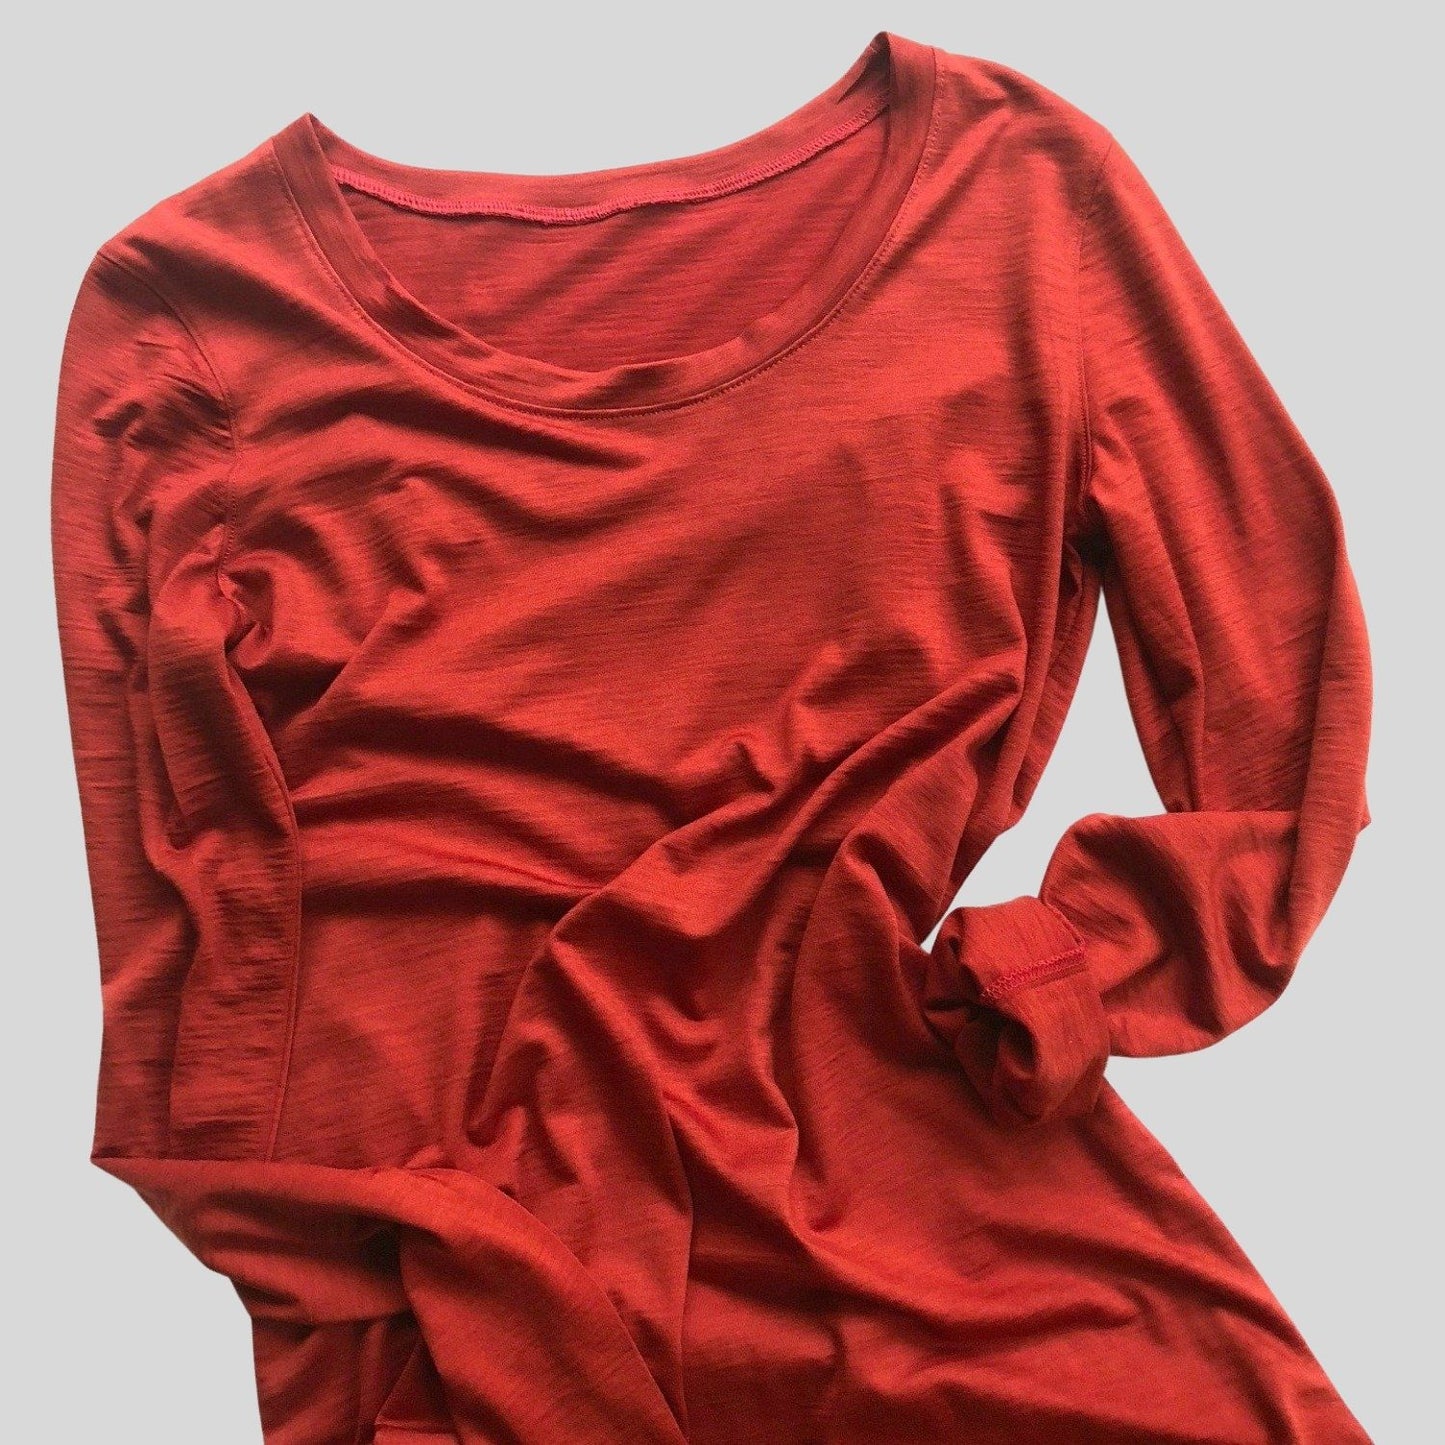 Red Tunic top merino wool | Tunic top in merino wool for women | Shop Women's wool clothes + tops made in Canada | Canadian Women's wool clothing shop | Econica